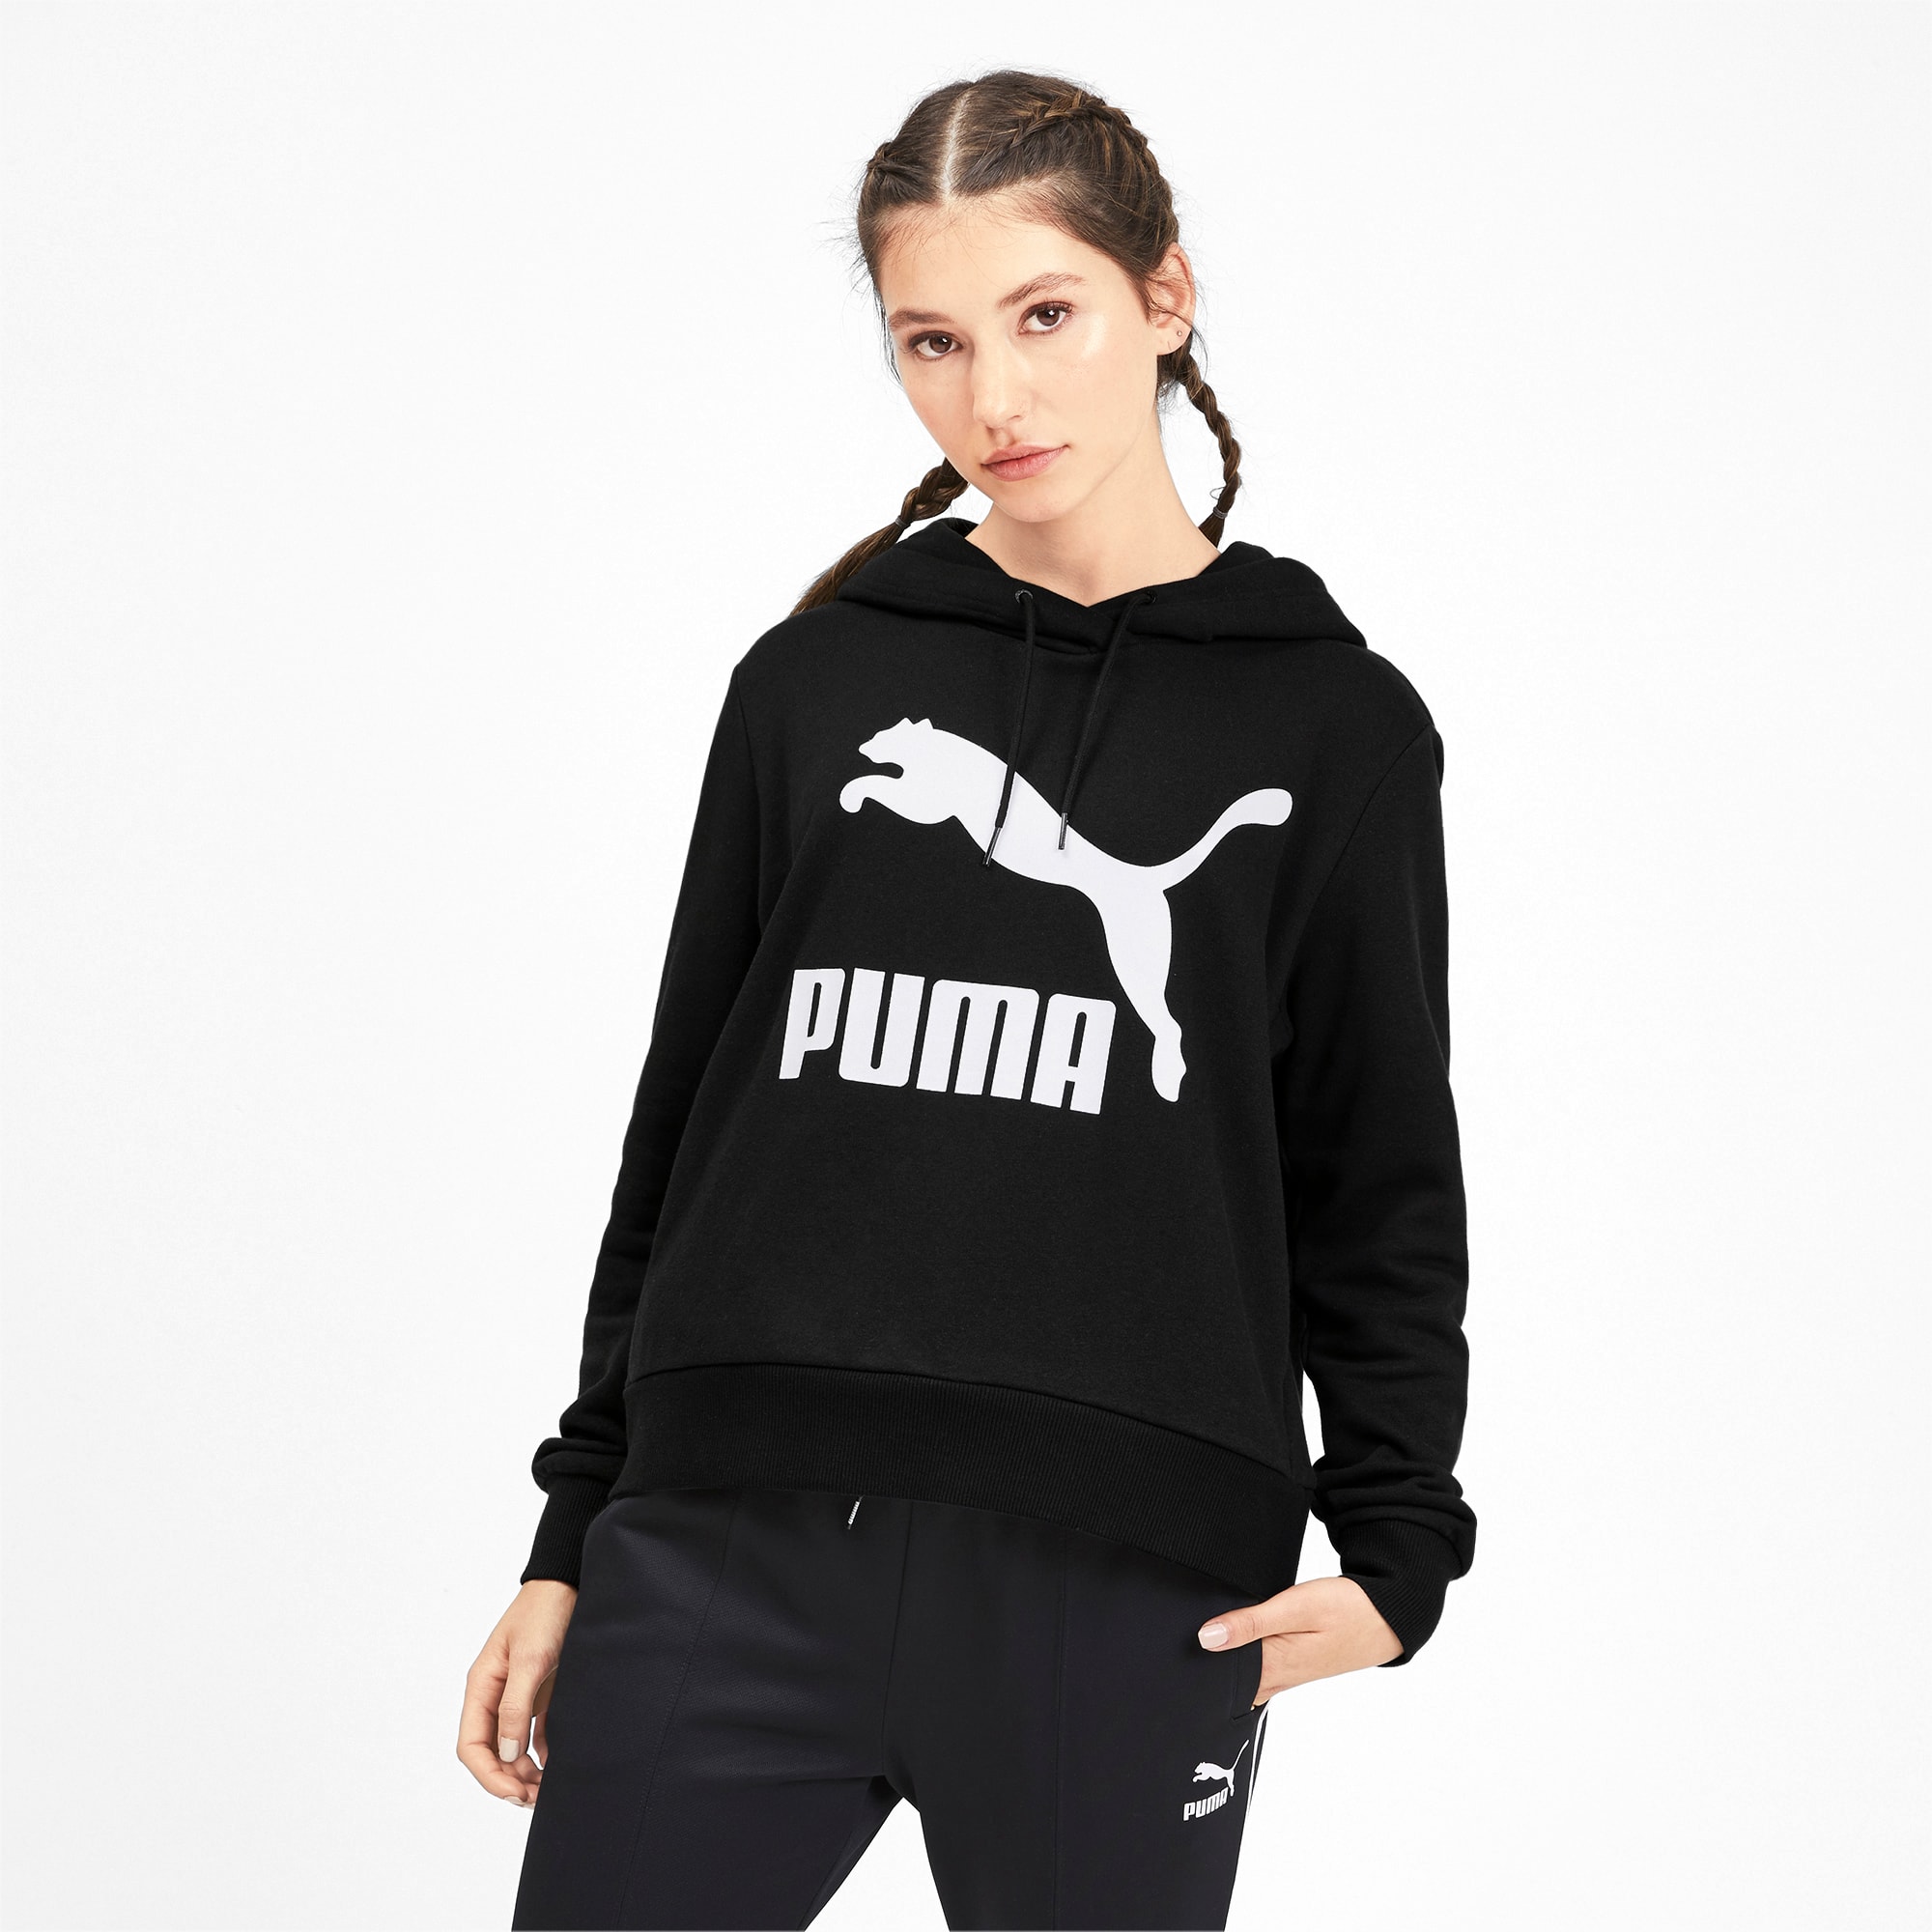 puma grey sweatshirt